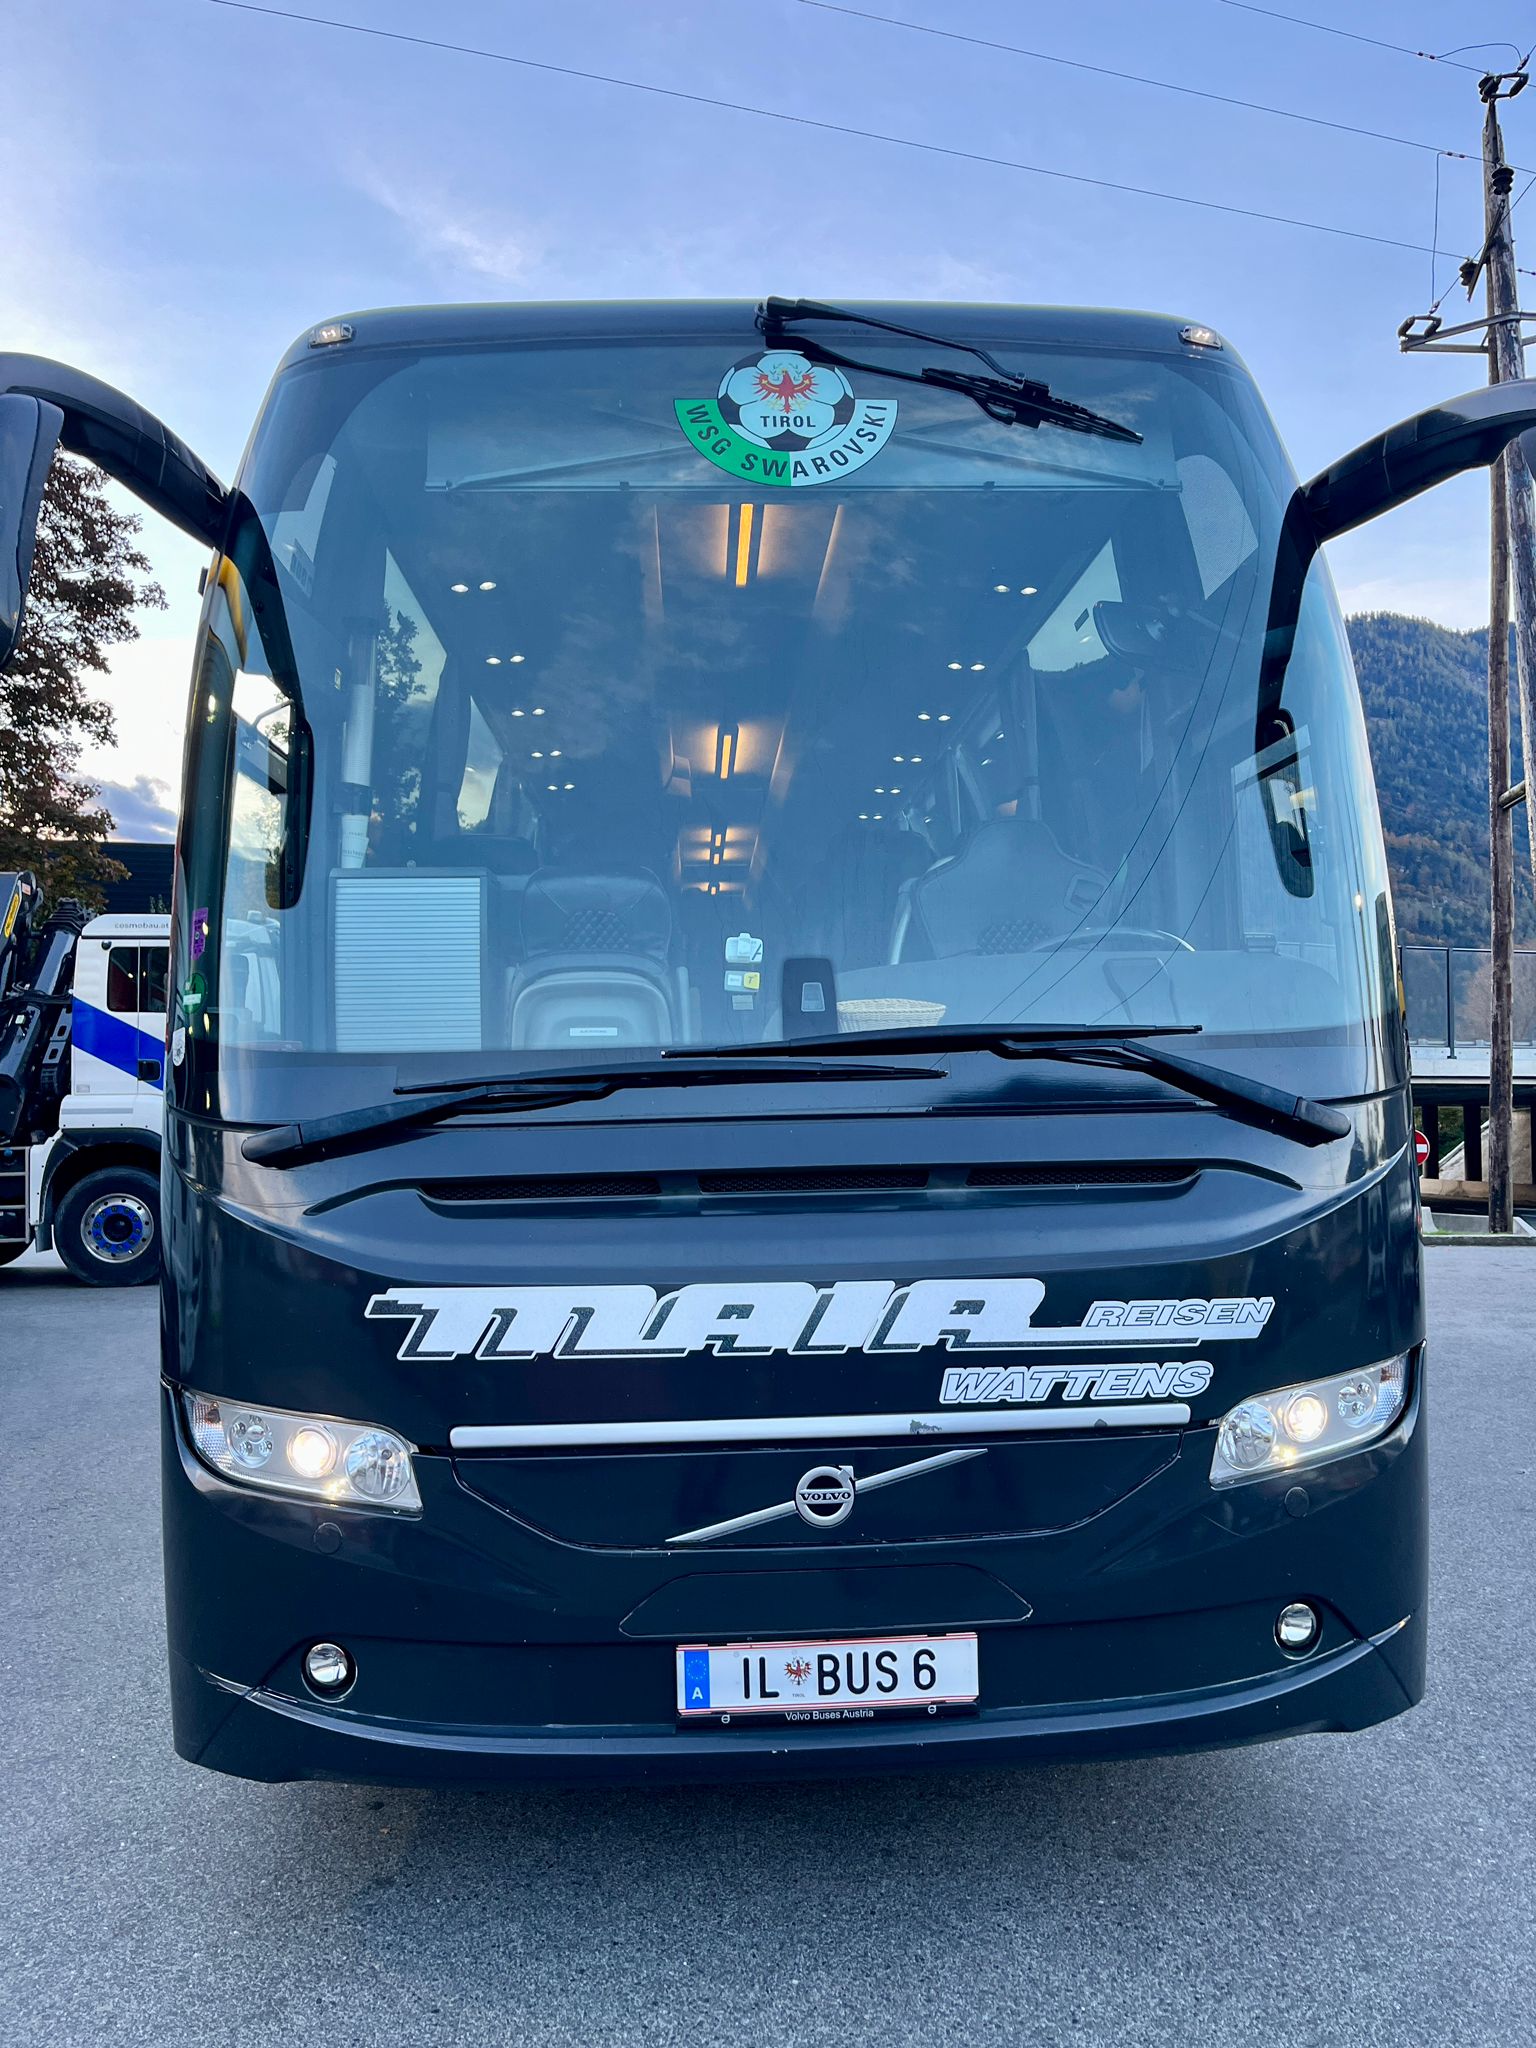 Mit dem modernen MAIR-Bus nach Zell am See!